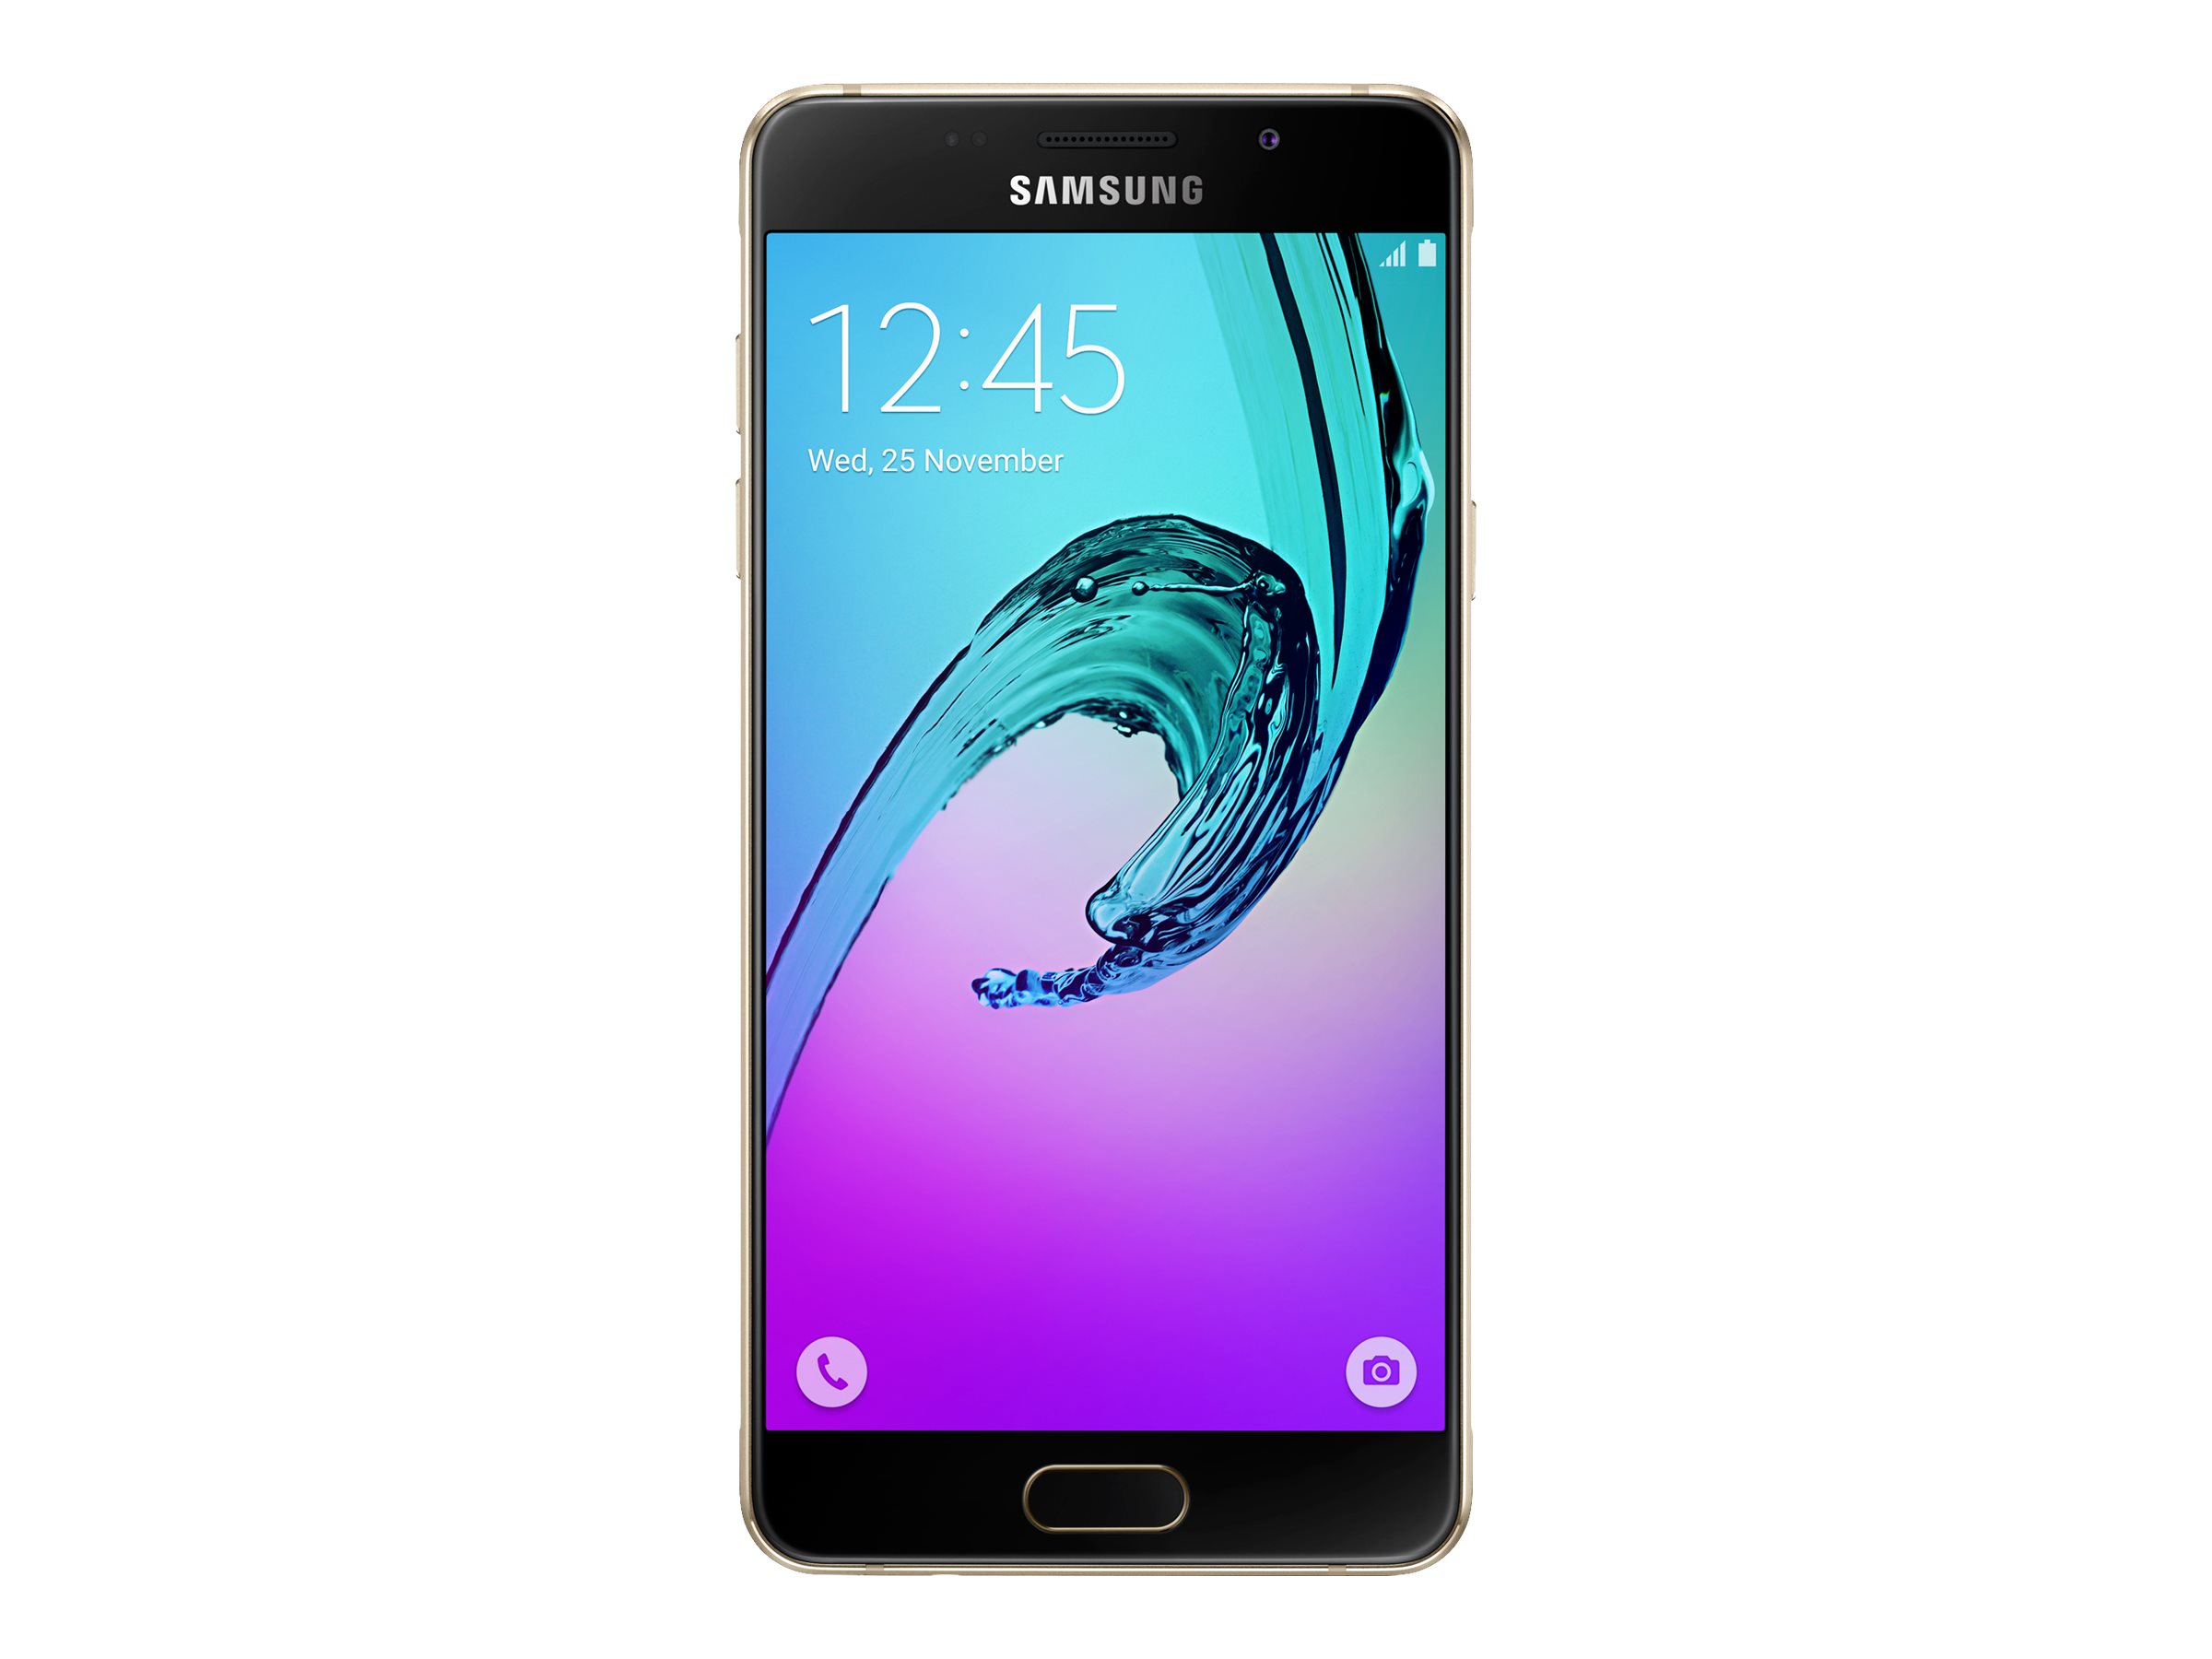 Samsung Galaxy A5 (2016) - 4G smartphone - dual-SIM - RAM 2 GB / Internal Memory 16 GB - microSD slot - OLED display - 5.2" - 1920 x 1080 pixels - rear camera 13 MP - front camera 5 MP - gold - image 1 of 6